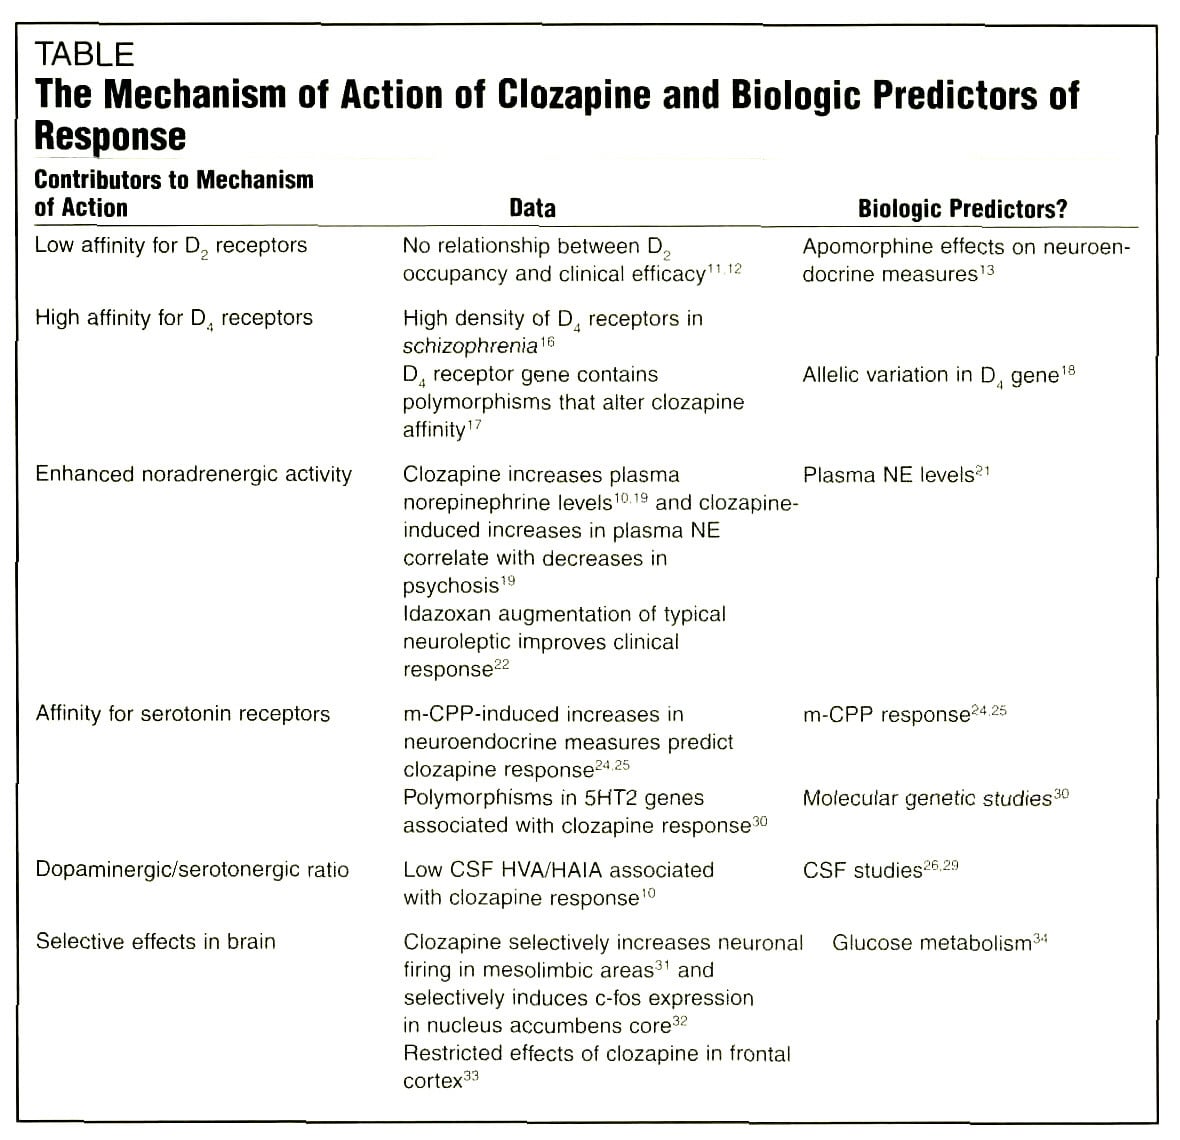 Biologic Predictors of Clozapine Response in Schizophrenia